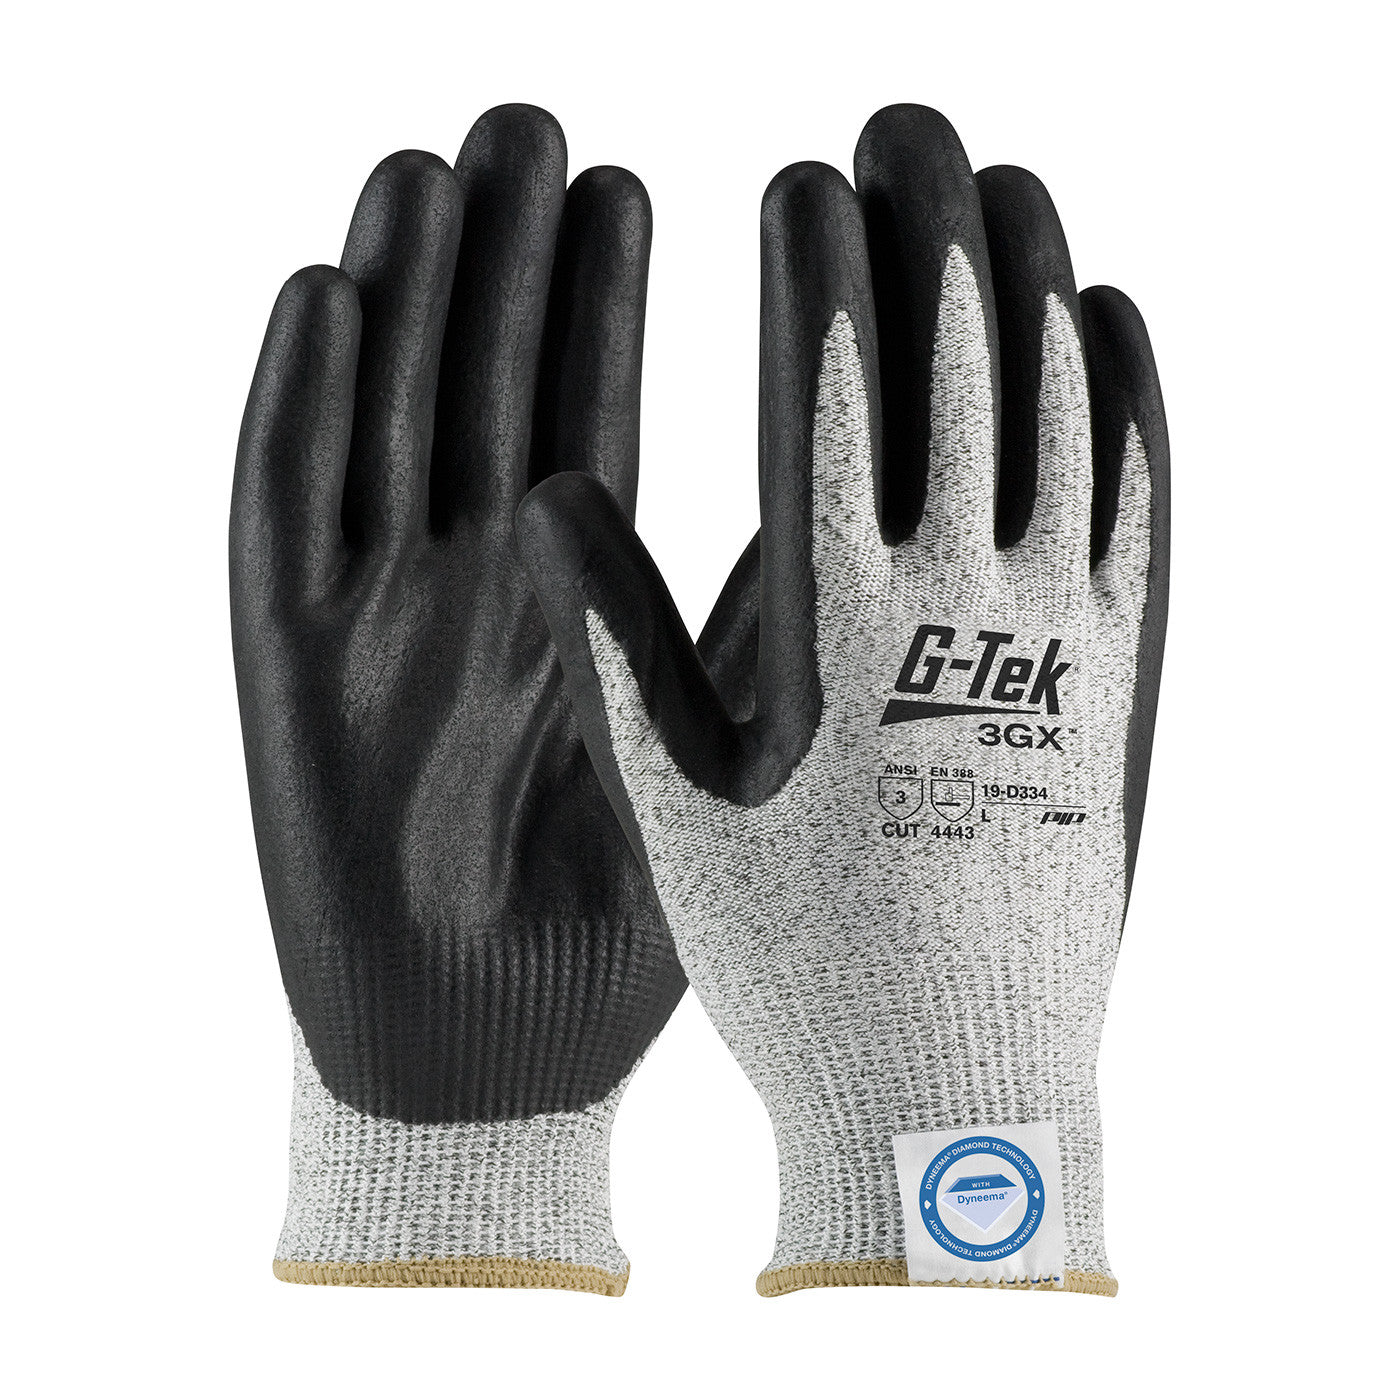 Medium Black Nitrile Level 1 Cut Resistant Dipped Work Gloves (3-pack)